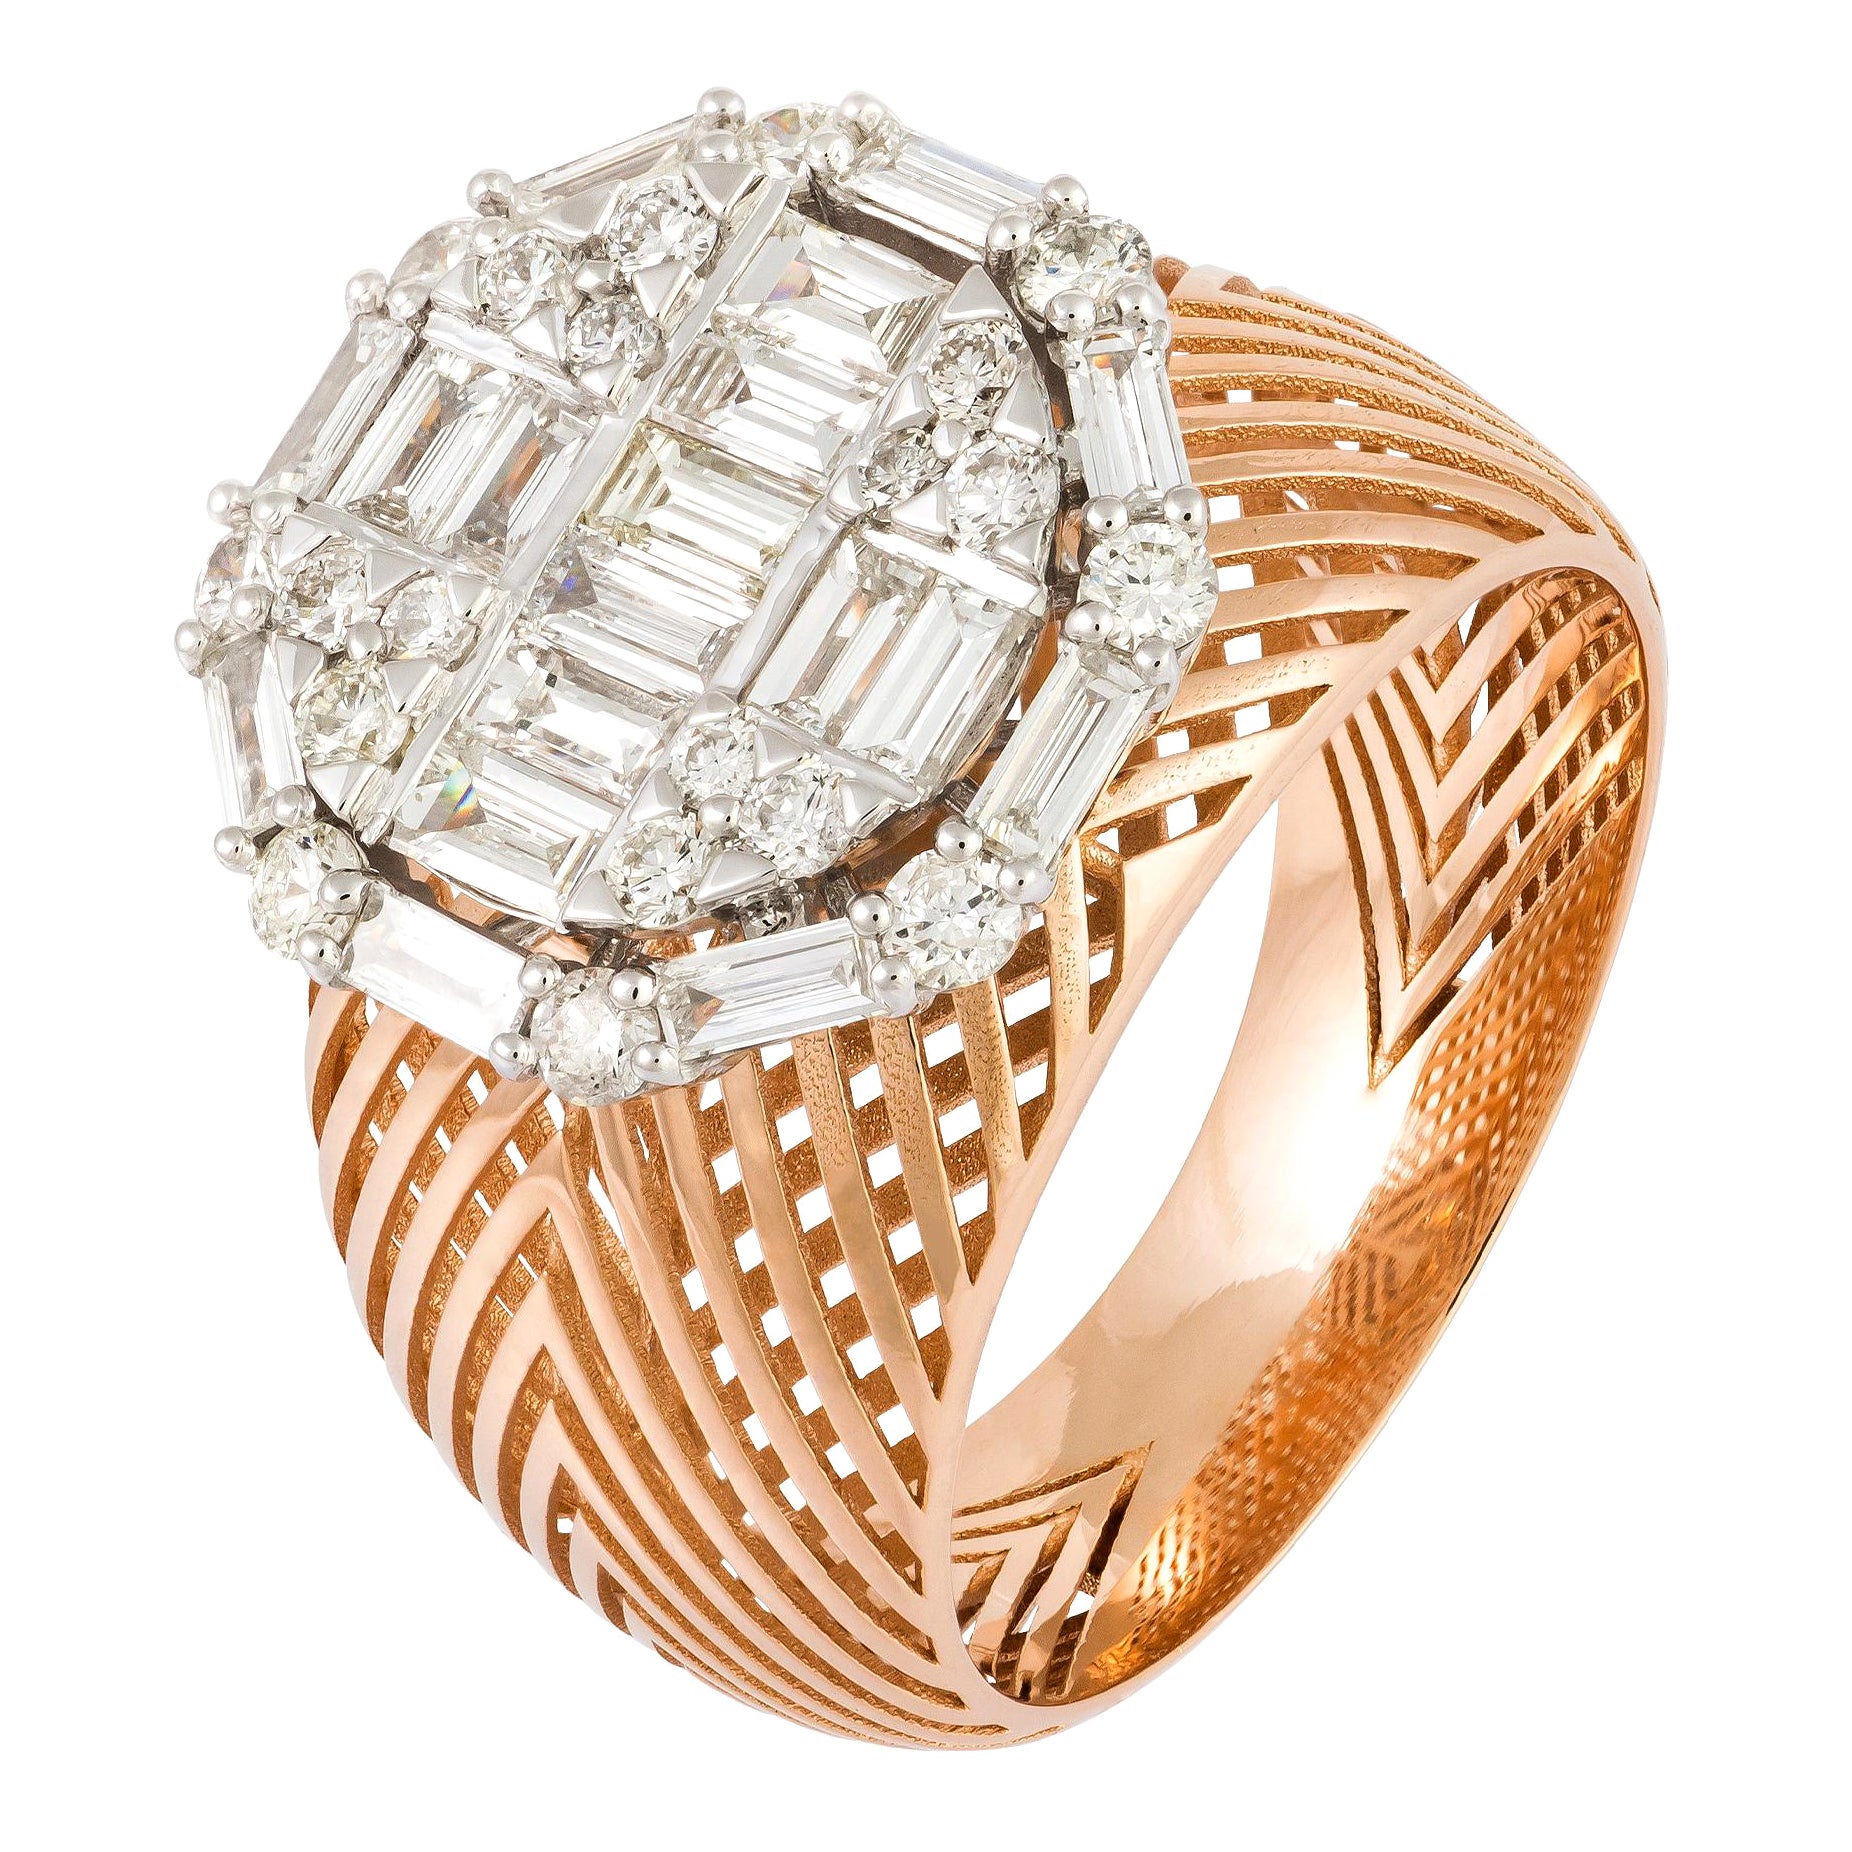 Evening White Pink 18K Gold White Diamond Ring for Her